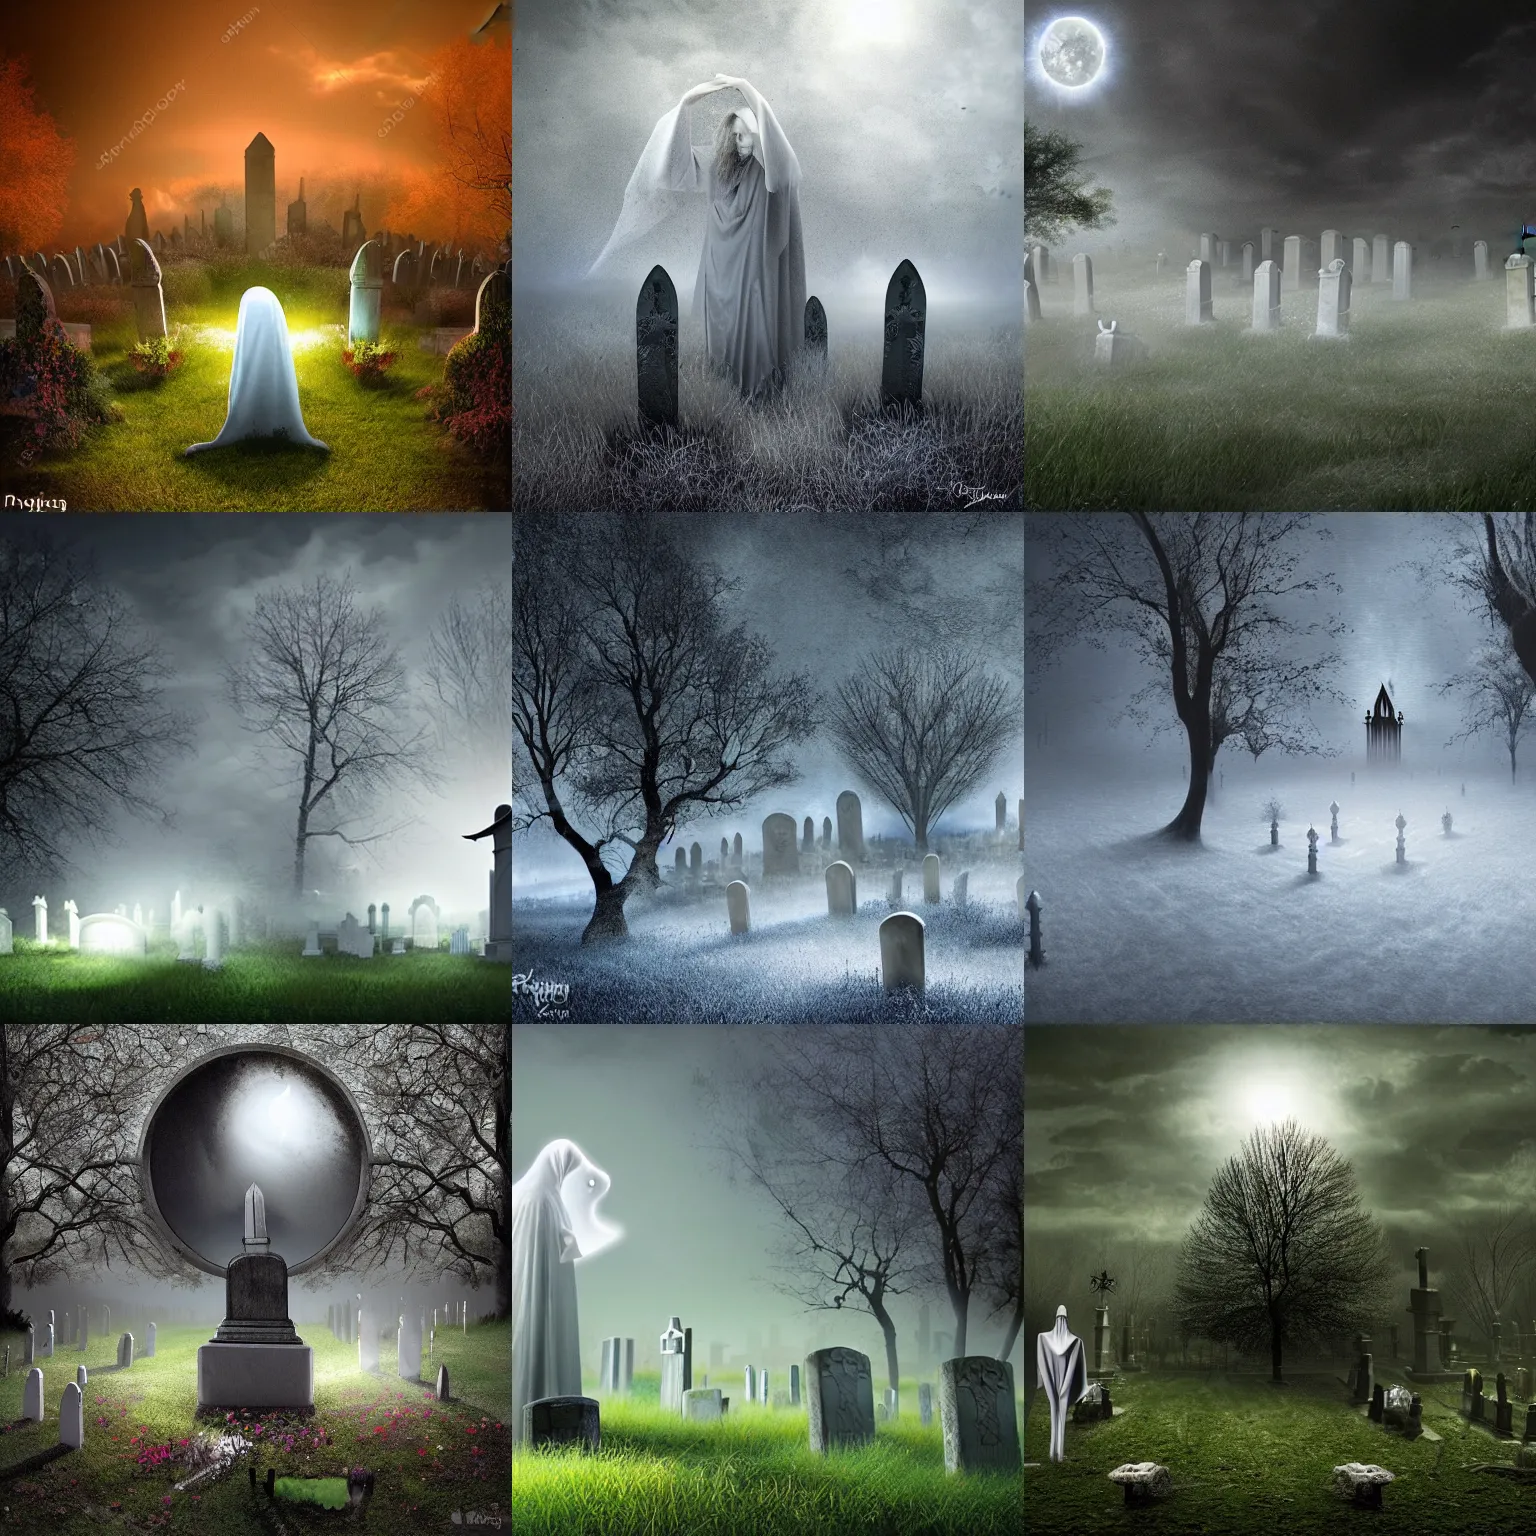 Prompt: igor zenin photo - realistic render of a strange ghost in a graveyard